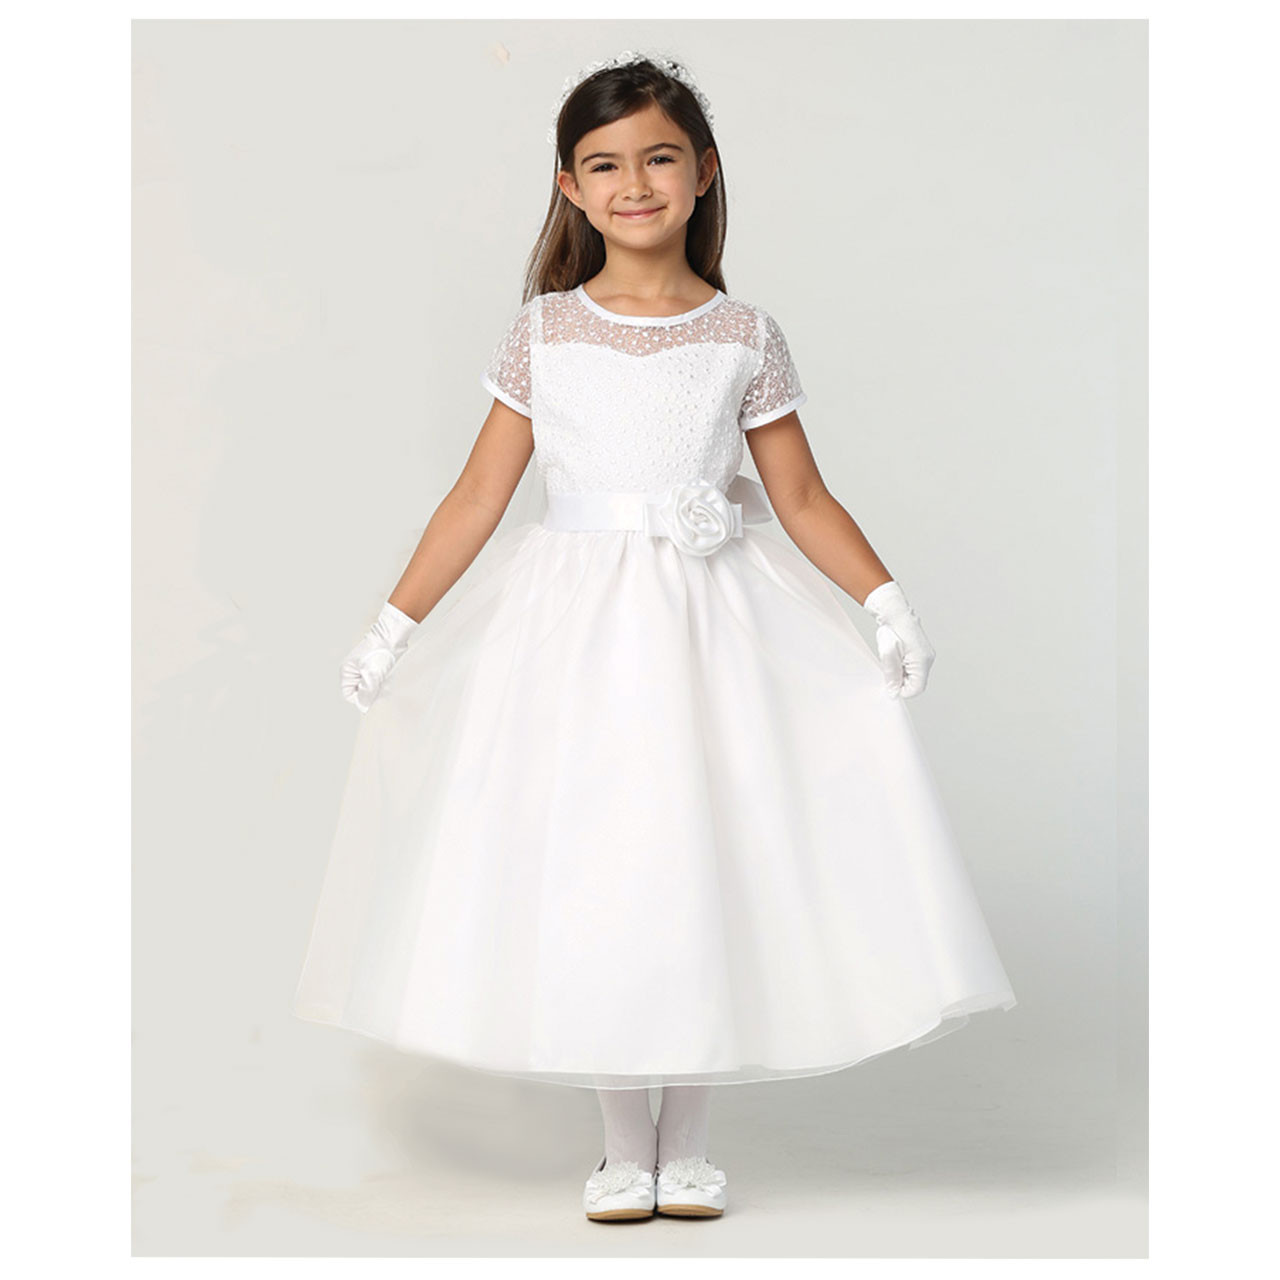 Teresa, Extended Sizes, First Communion Dress